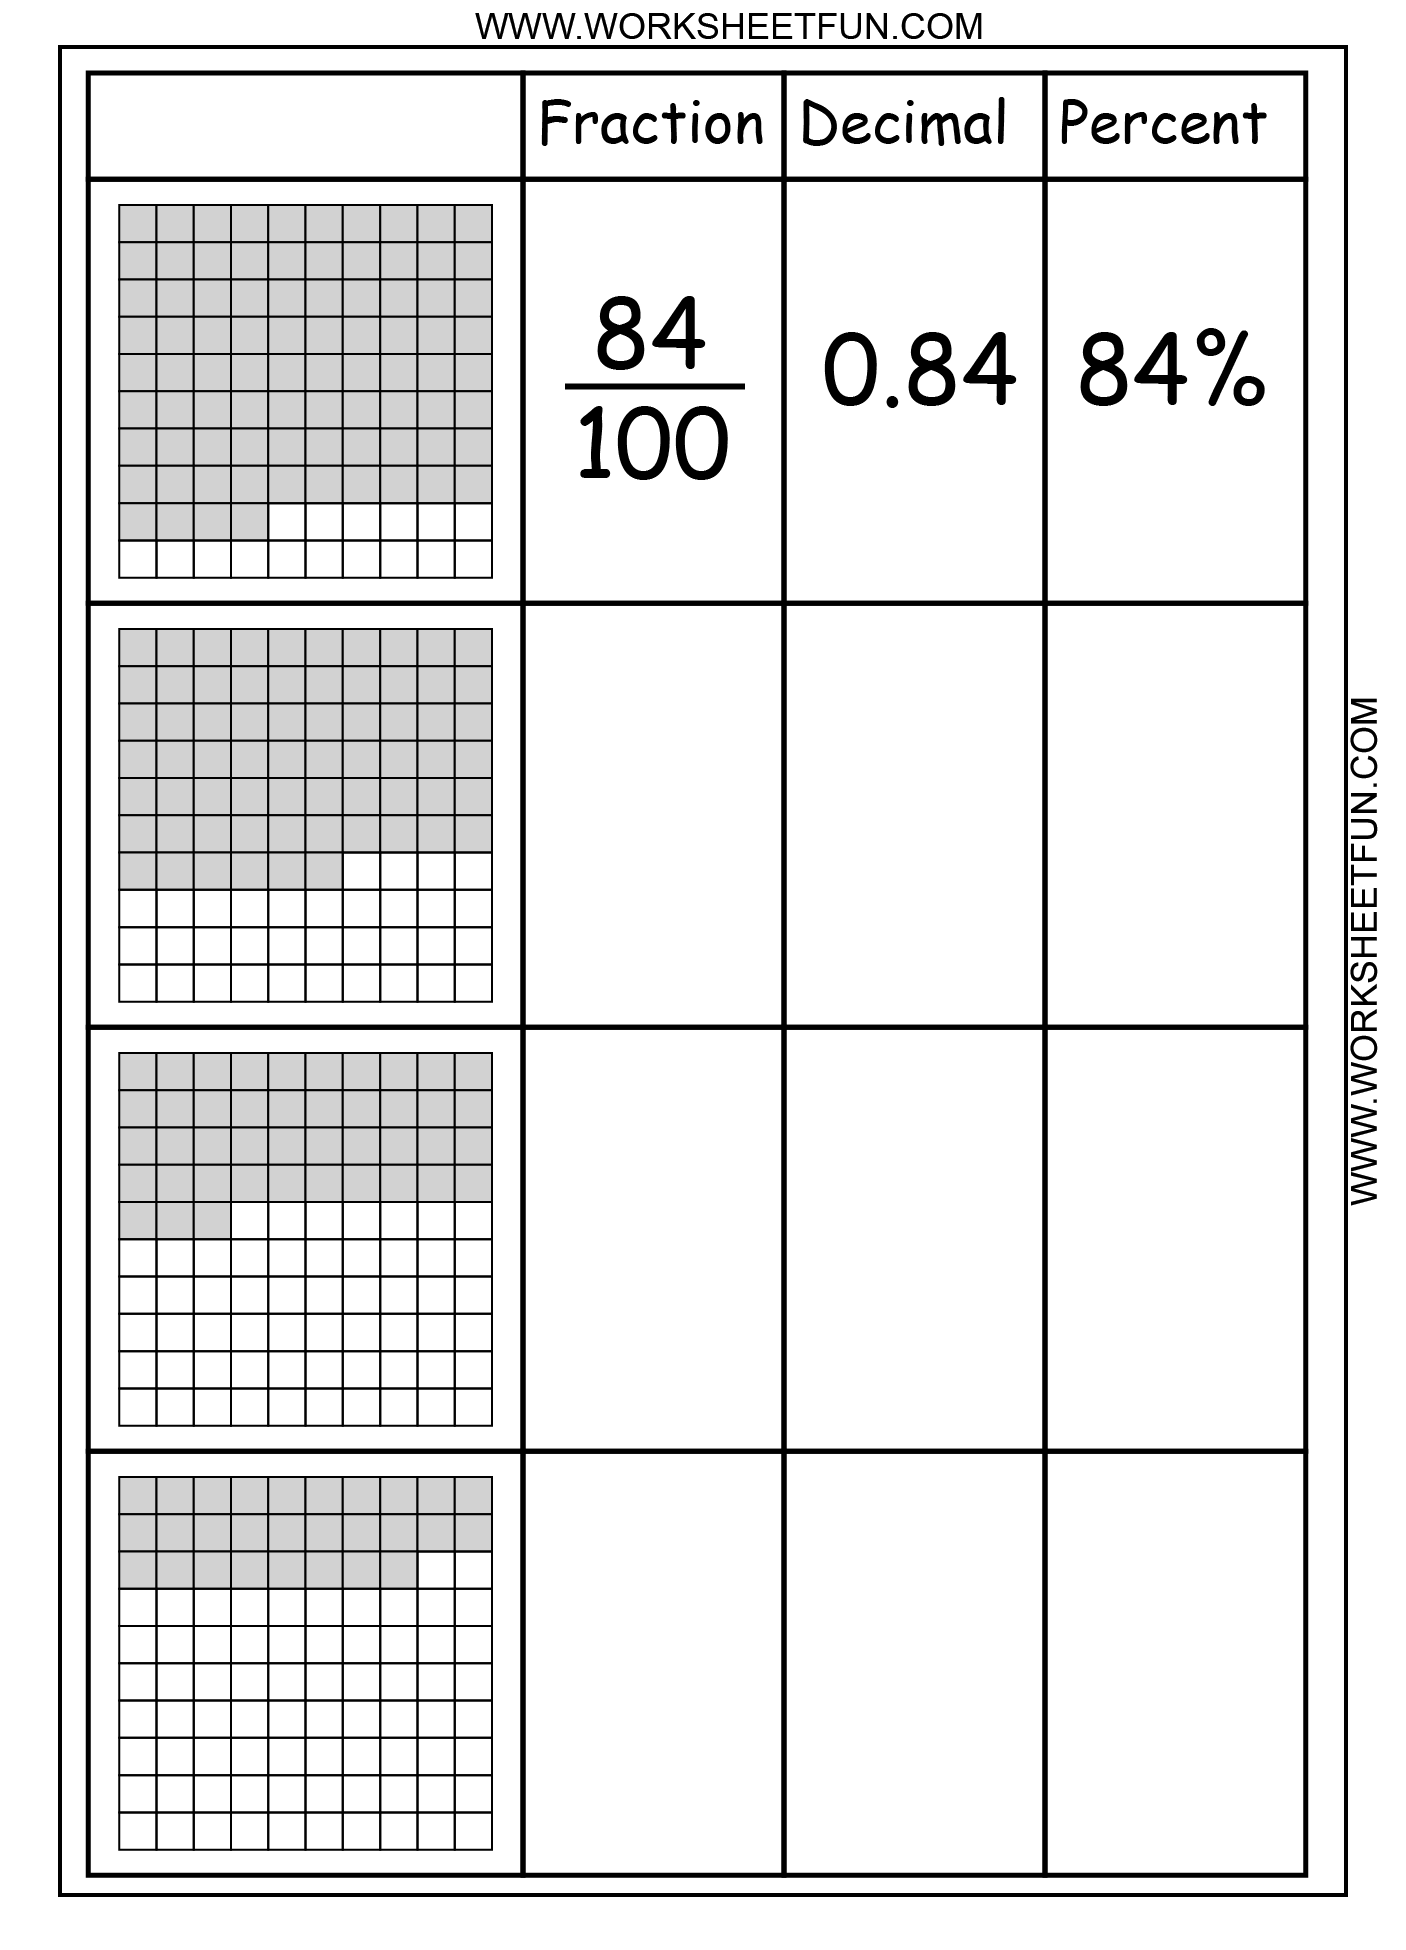 decimals-to-fractions-worksheet-pdf-cpadevelopers